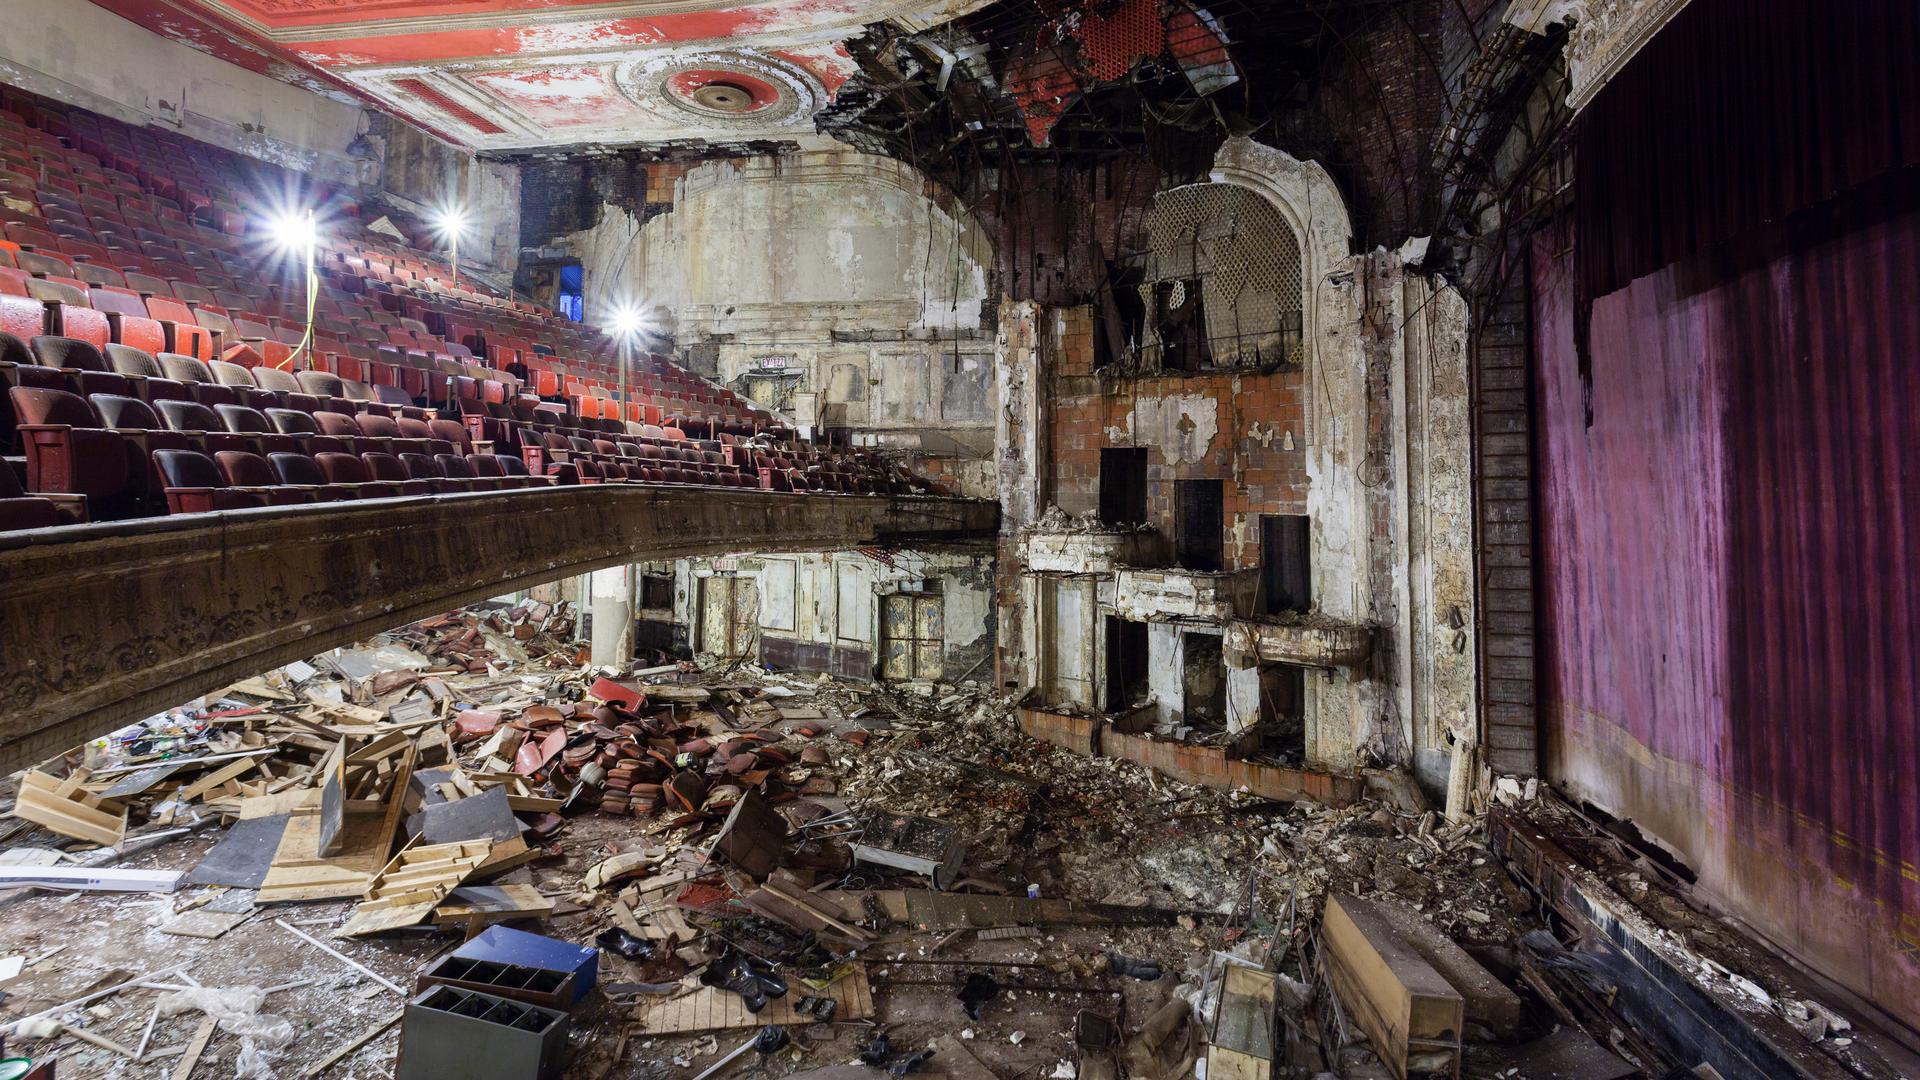 Театр после пожара. Театр Парамаунт Нью Йорк. Заброшенный театр. Заброшенный оперный театр. Разрушенный театр.